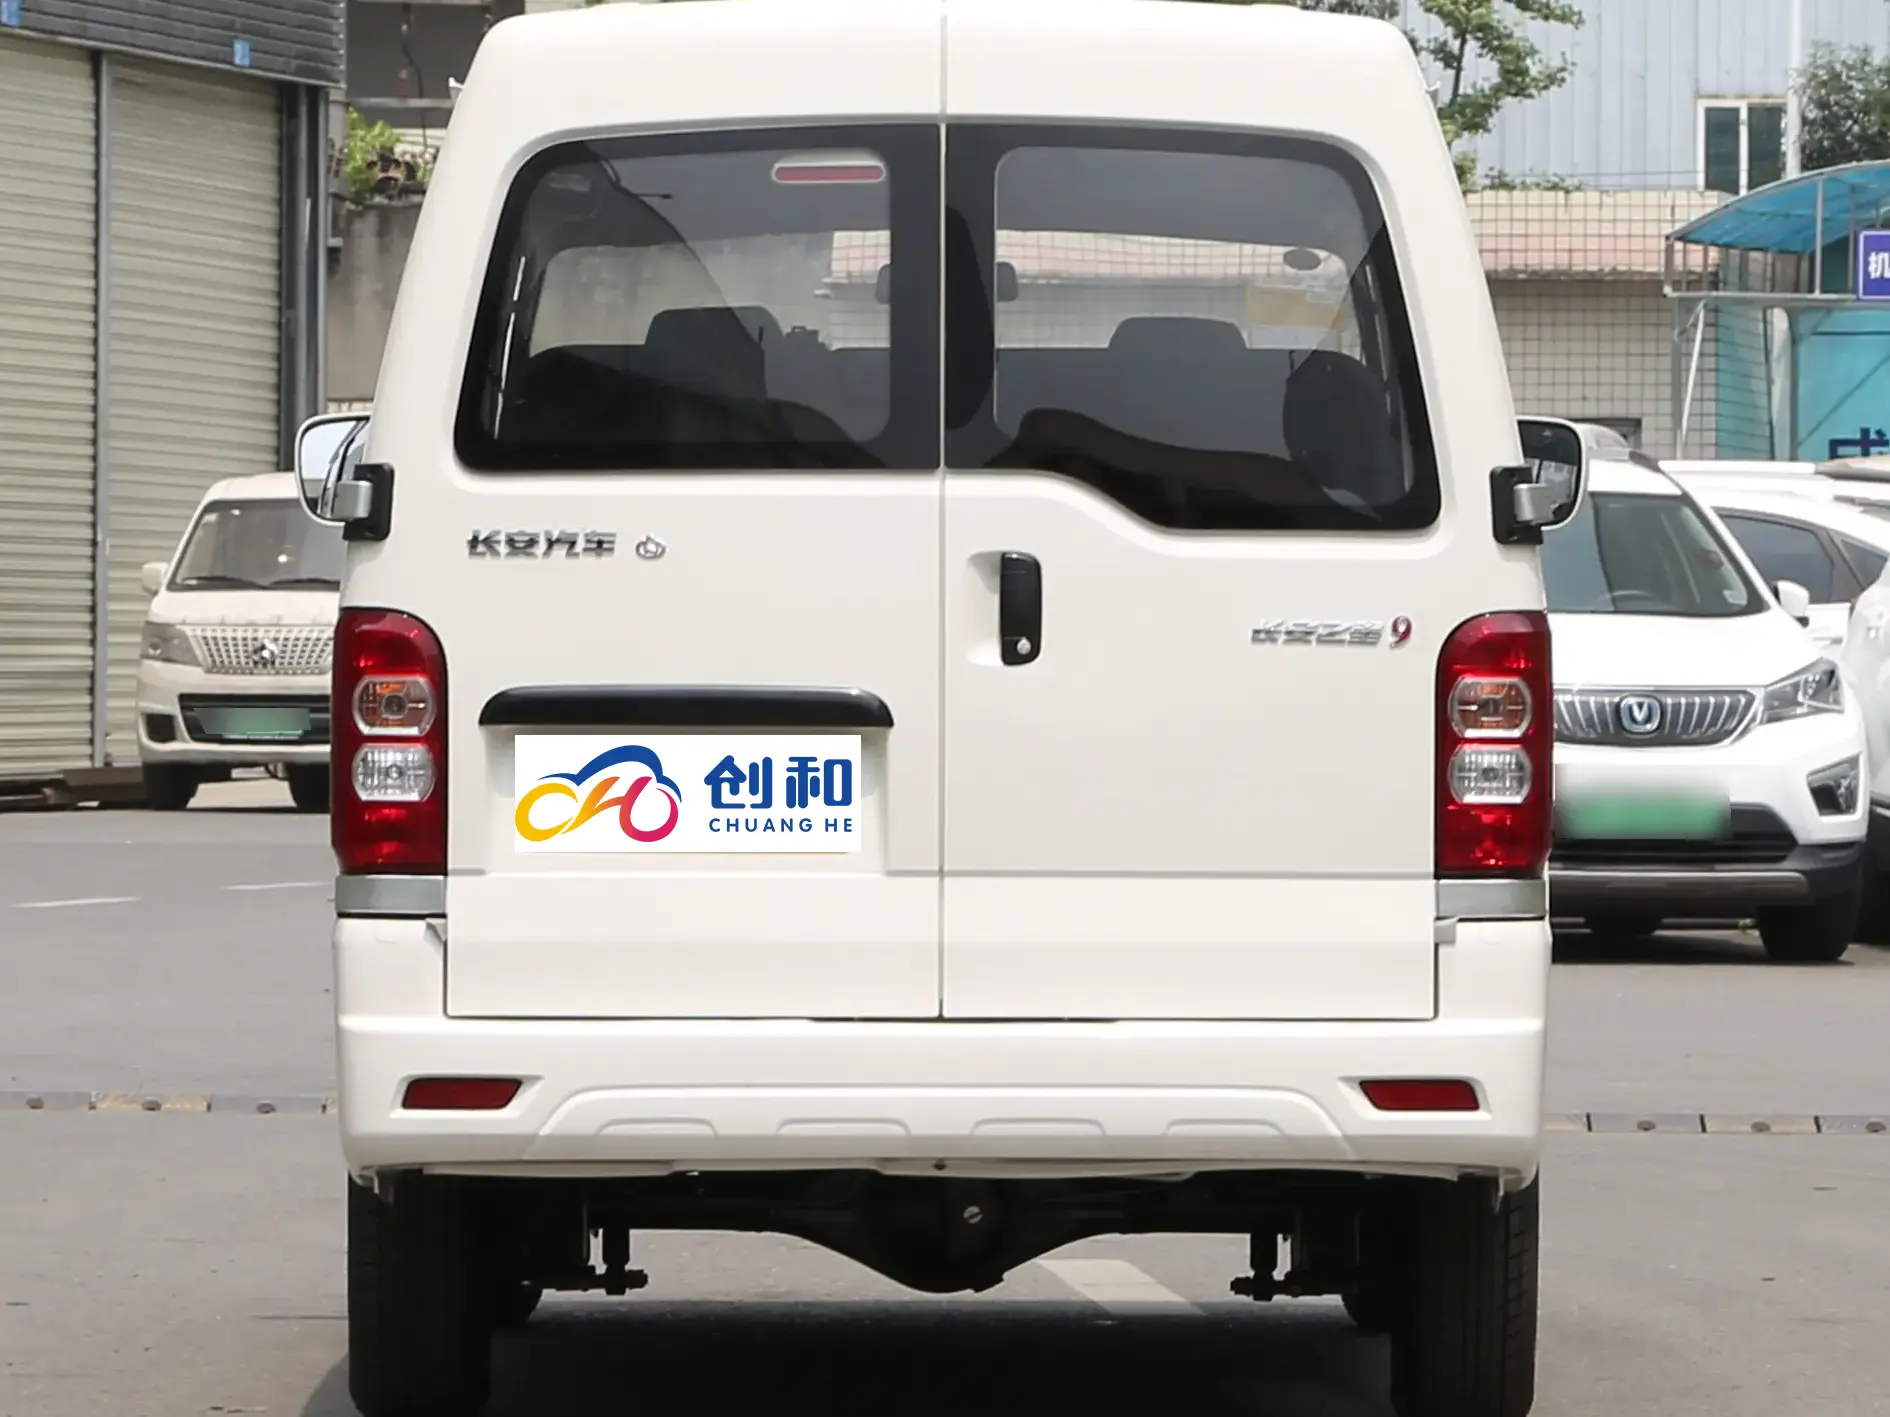 Hot Sale Star 9 China New Changan Mini van High Performance Gasoline Cheep Van passenger Car changan kaicheng star 9